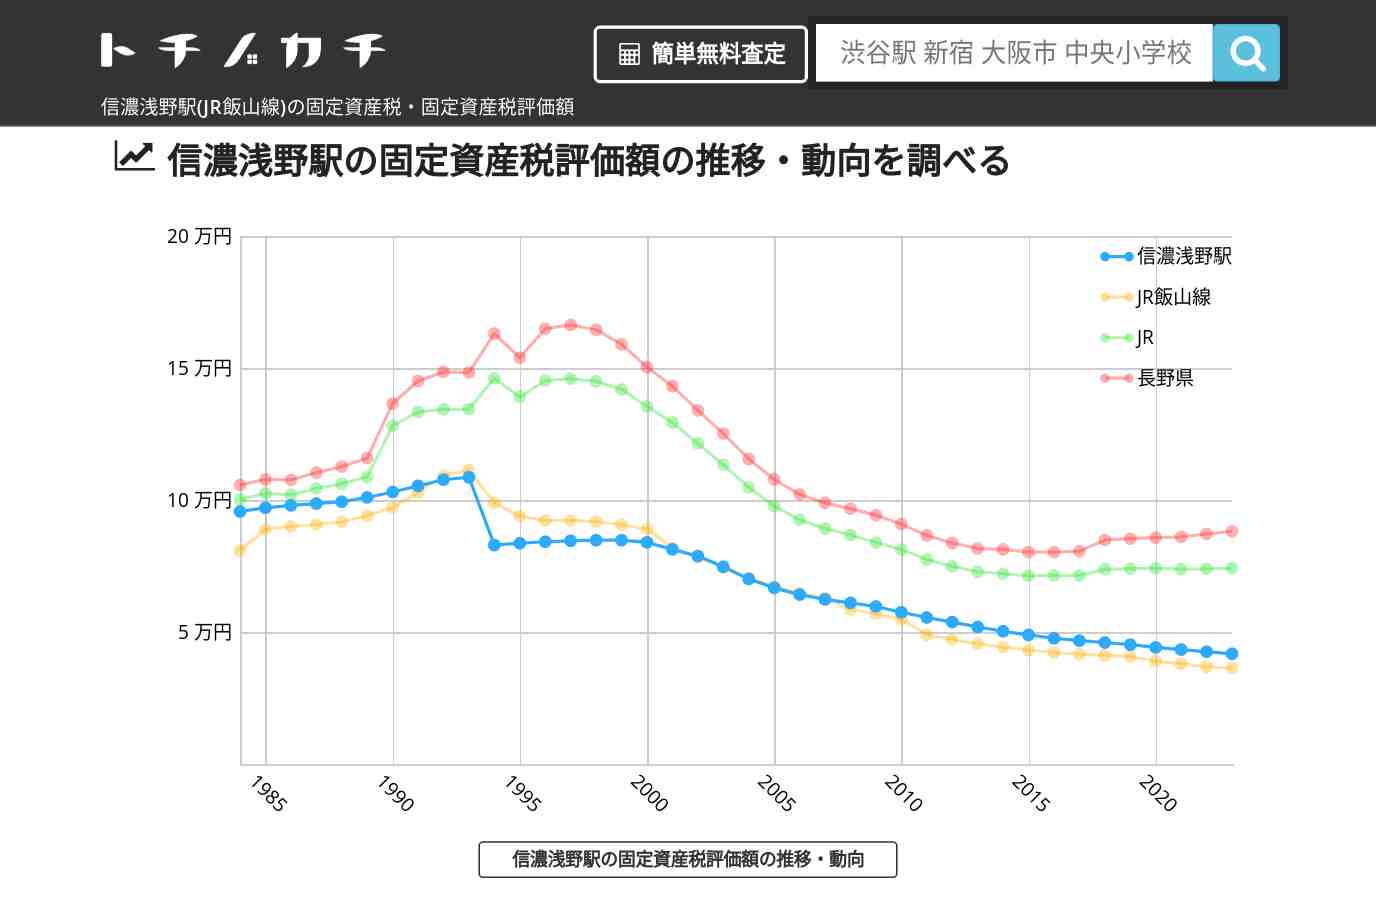 信濃浅野駅(JR飯山線)の固定資産税・固定資産税評価額 | トチノカチ